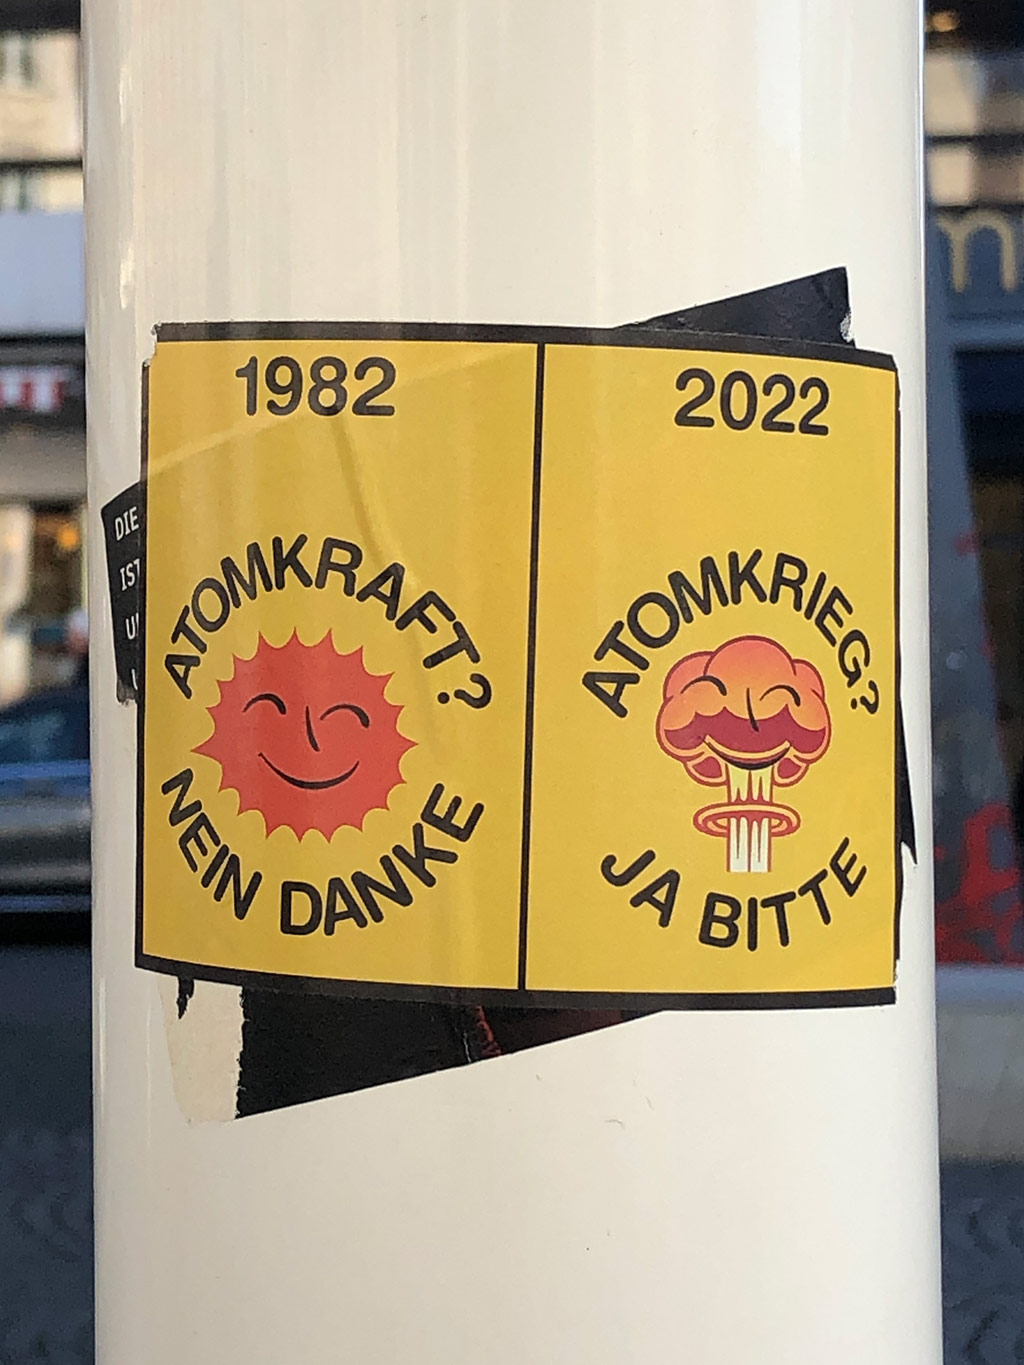 Abwandlung des Logos „Atomkraft Nein Danke" - 1982 vs 2022